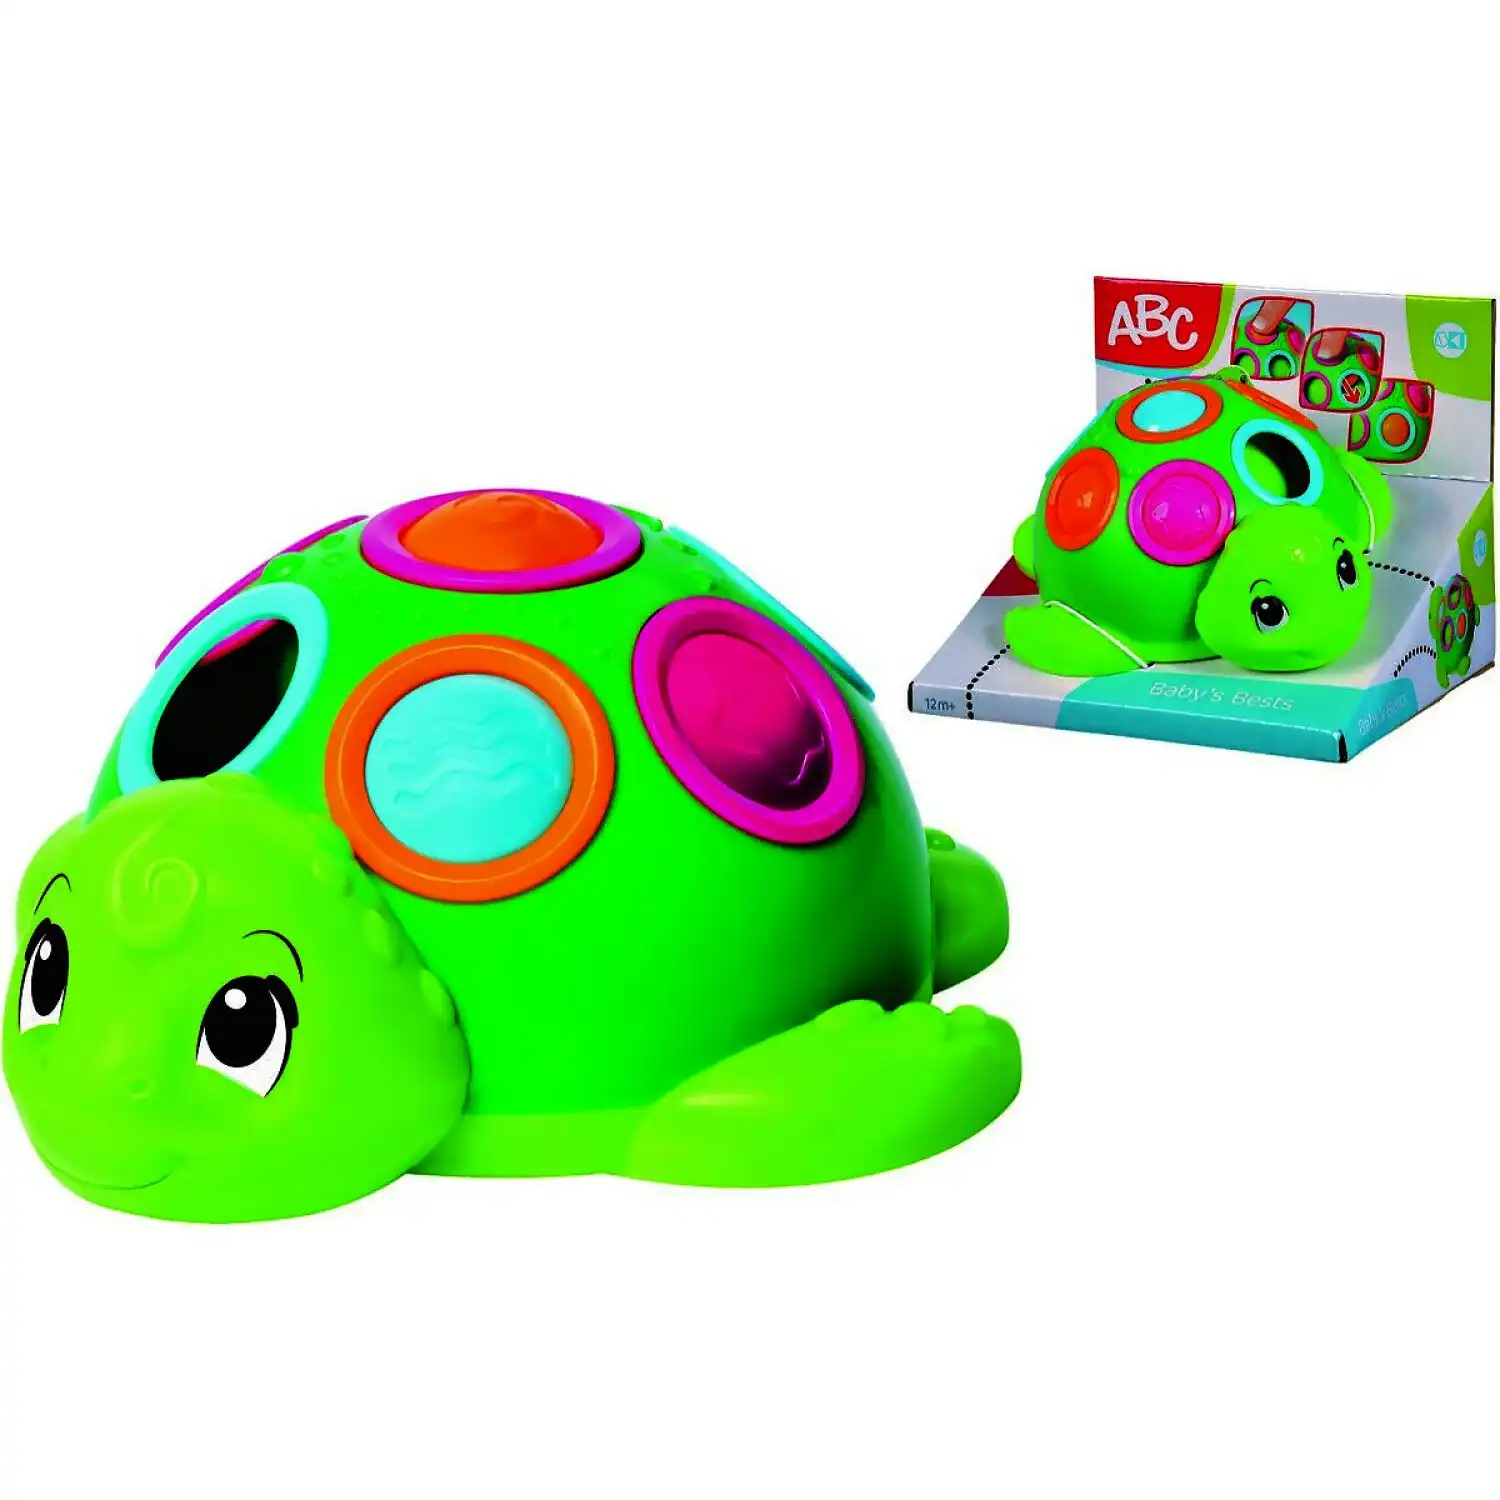 Simba Toys - ABC Slide'n Match Turtle